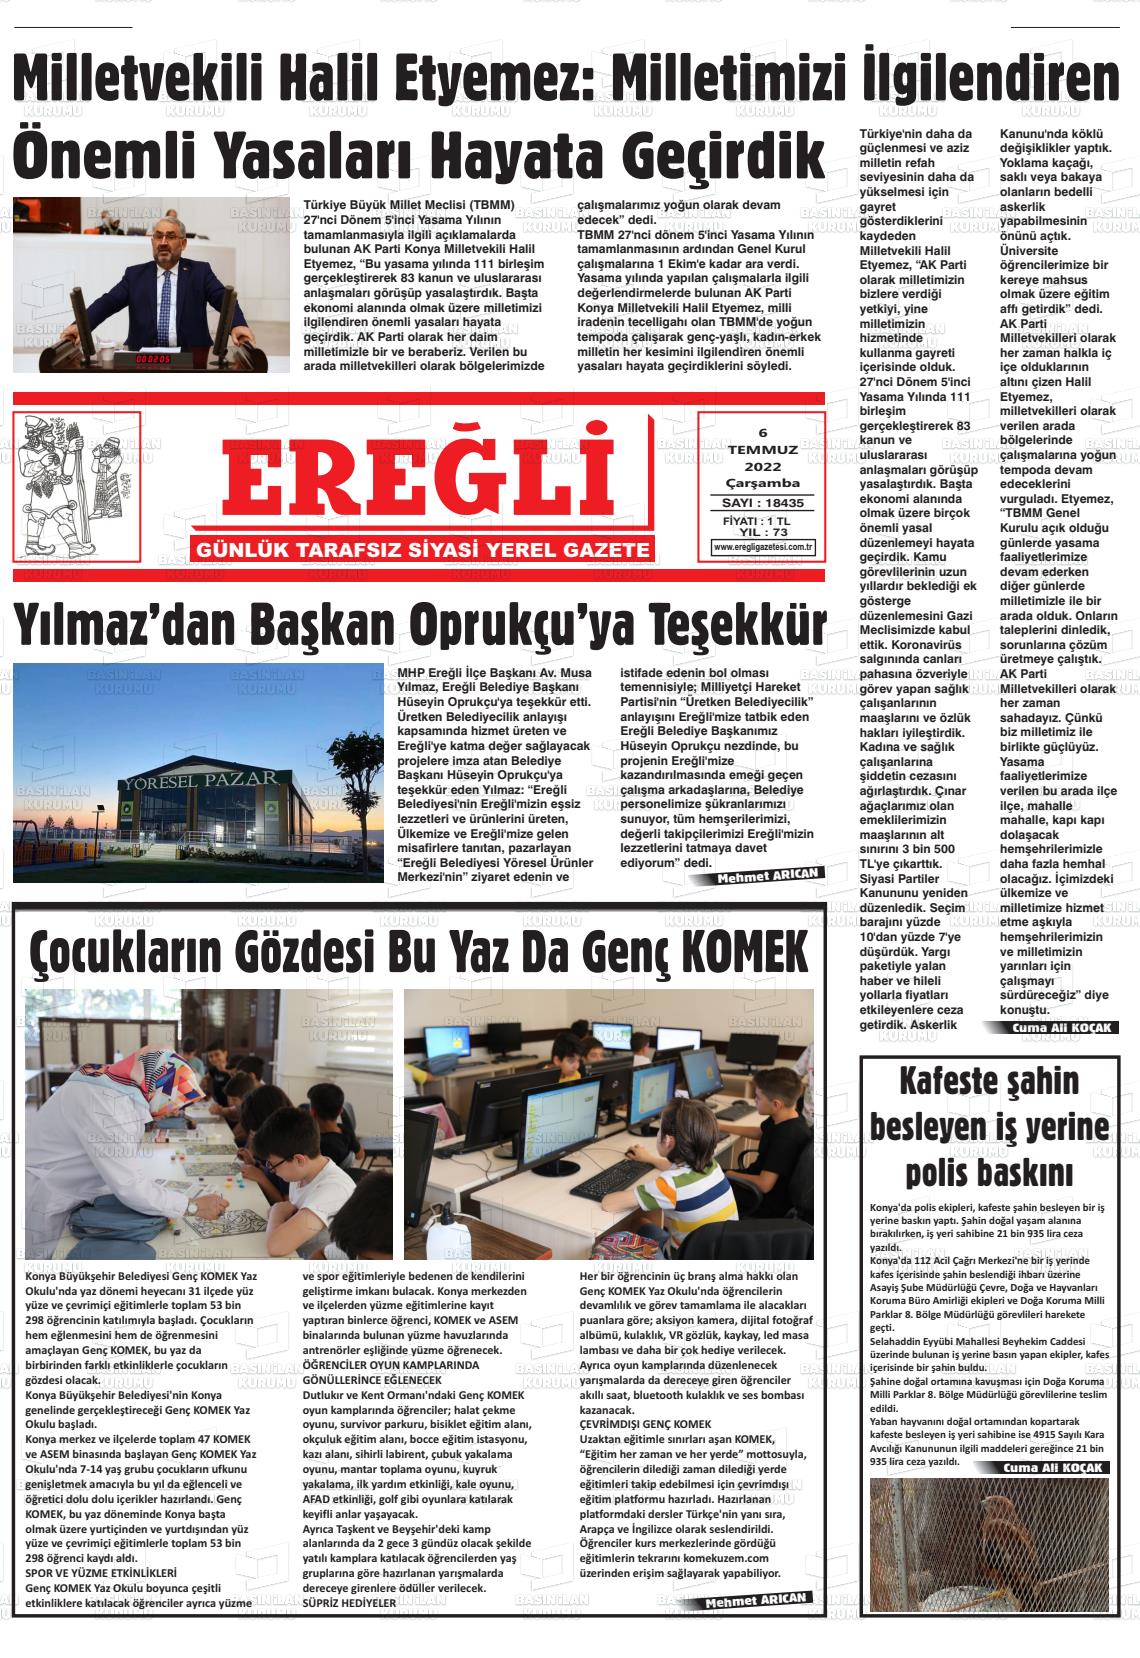 06 Temmuz 2022 Ereğli Gazete Manşeti